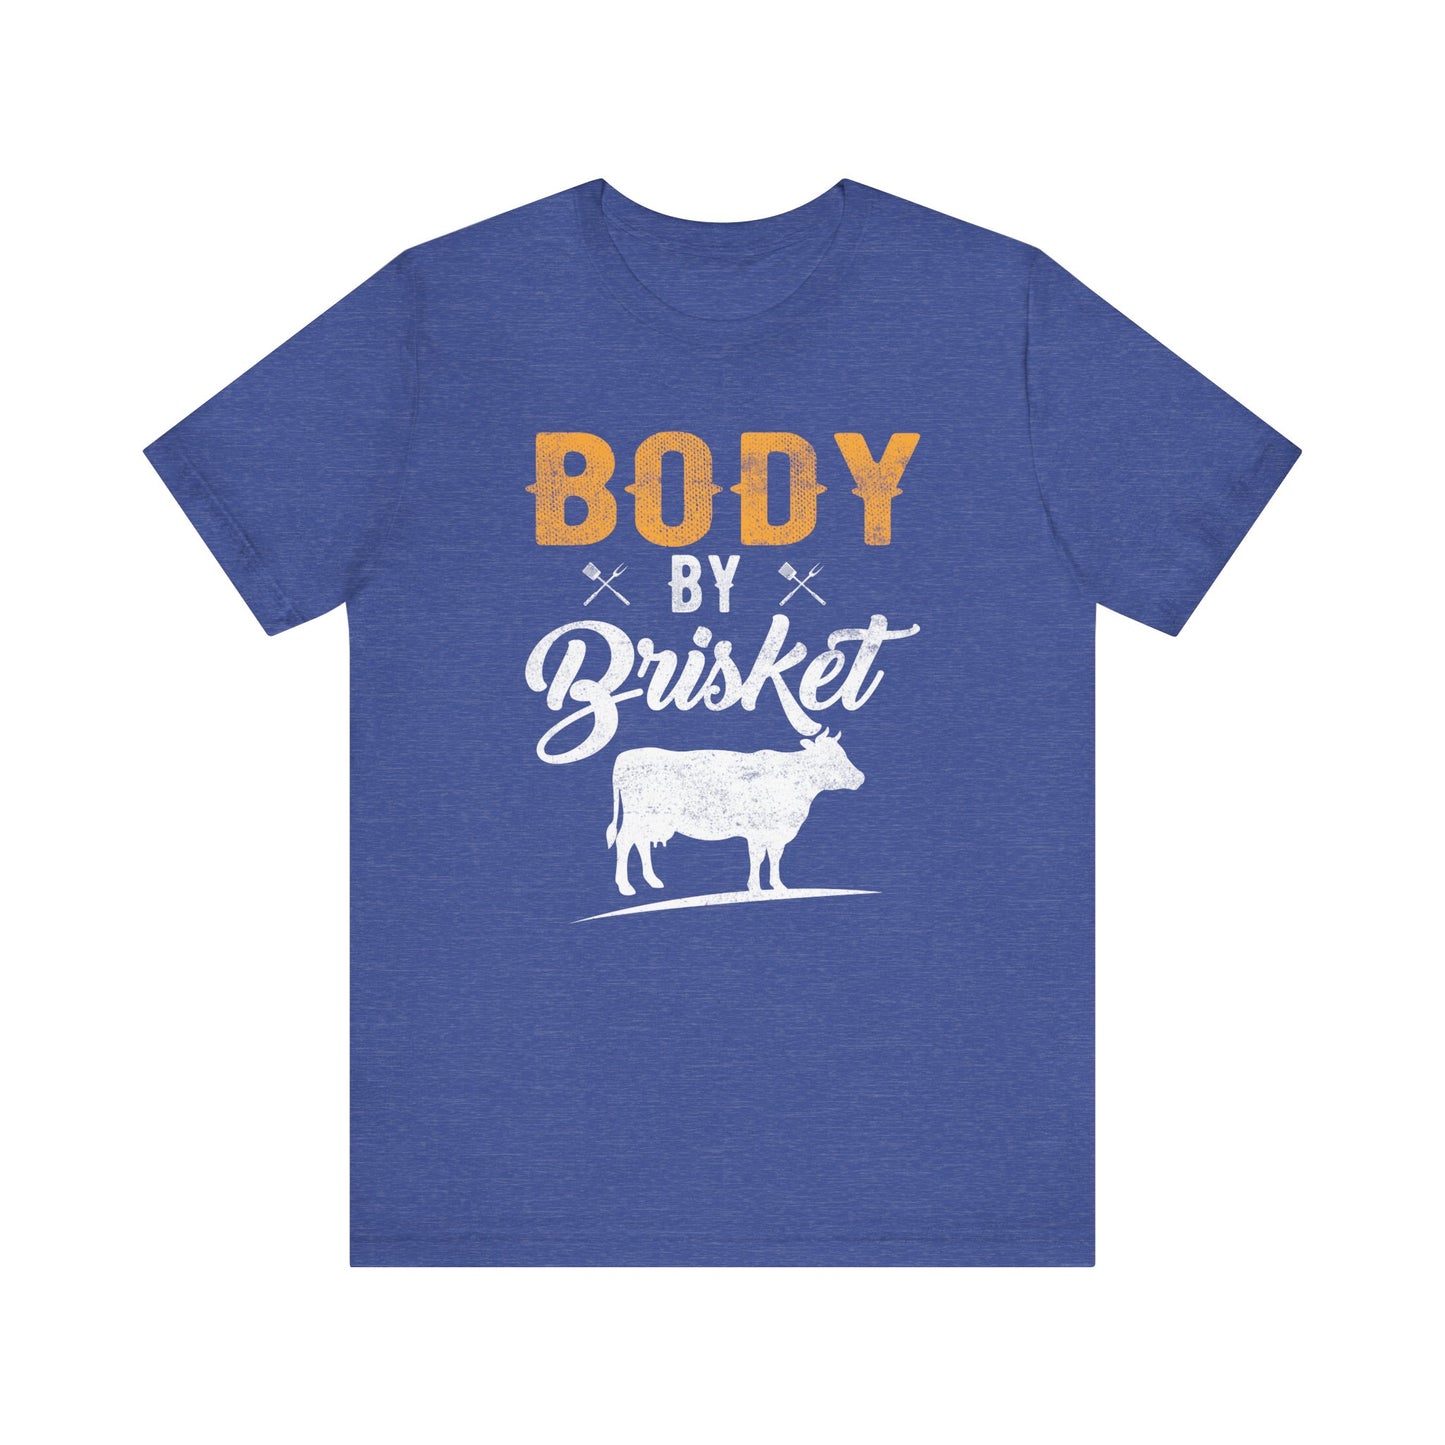 .Body by brisket T-Shirt